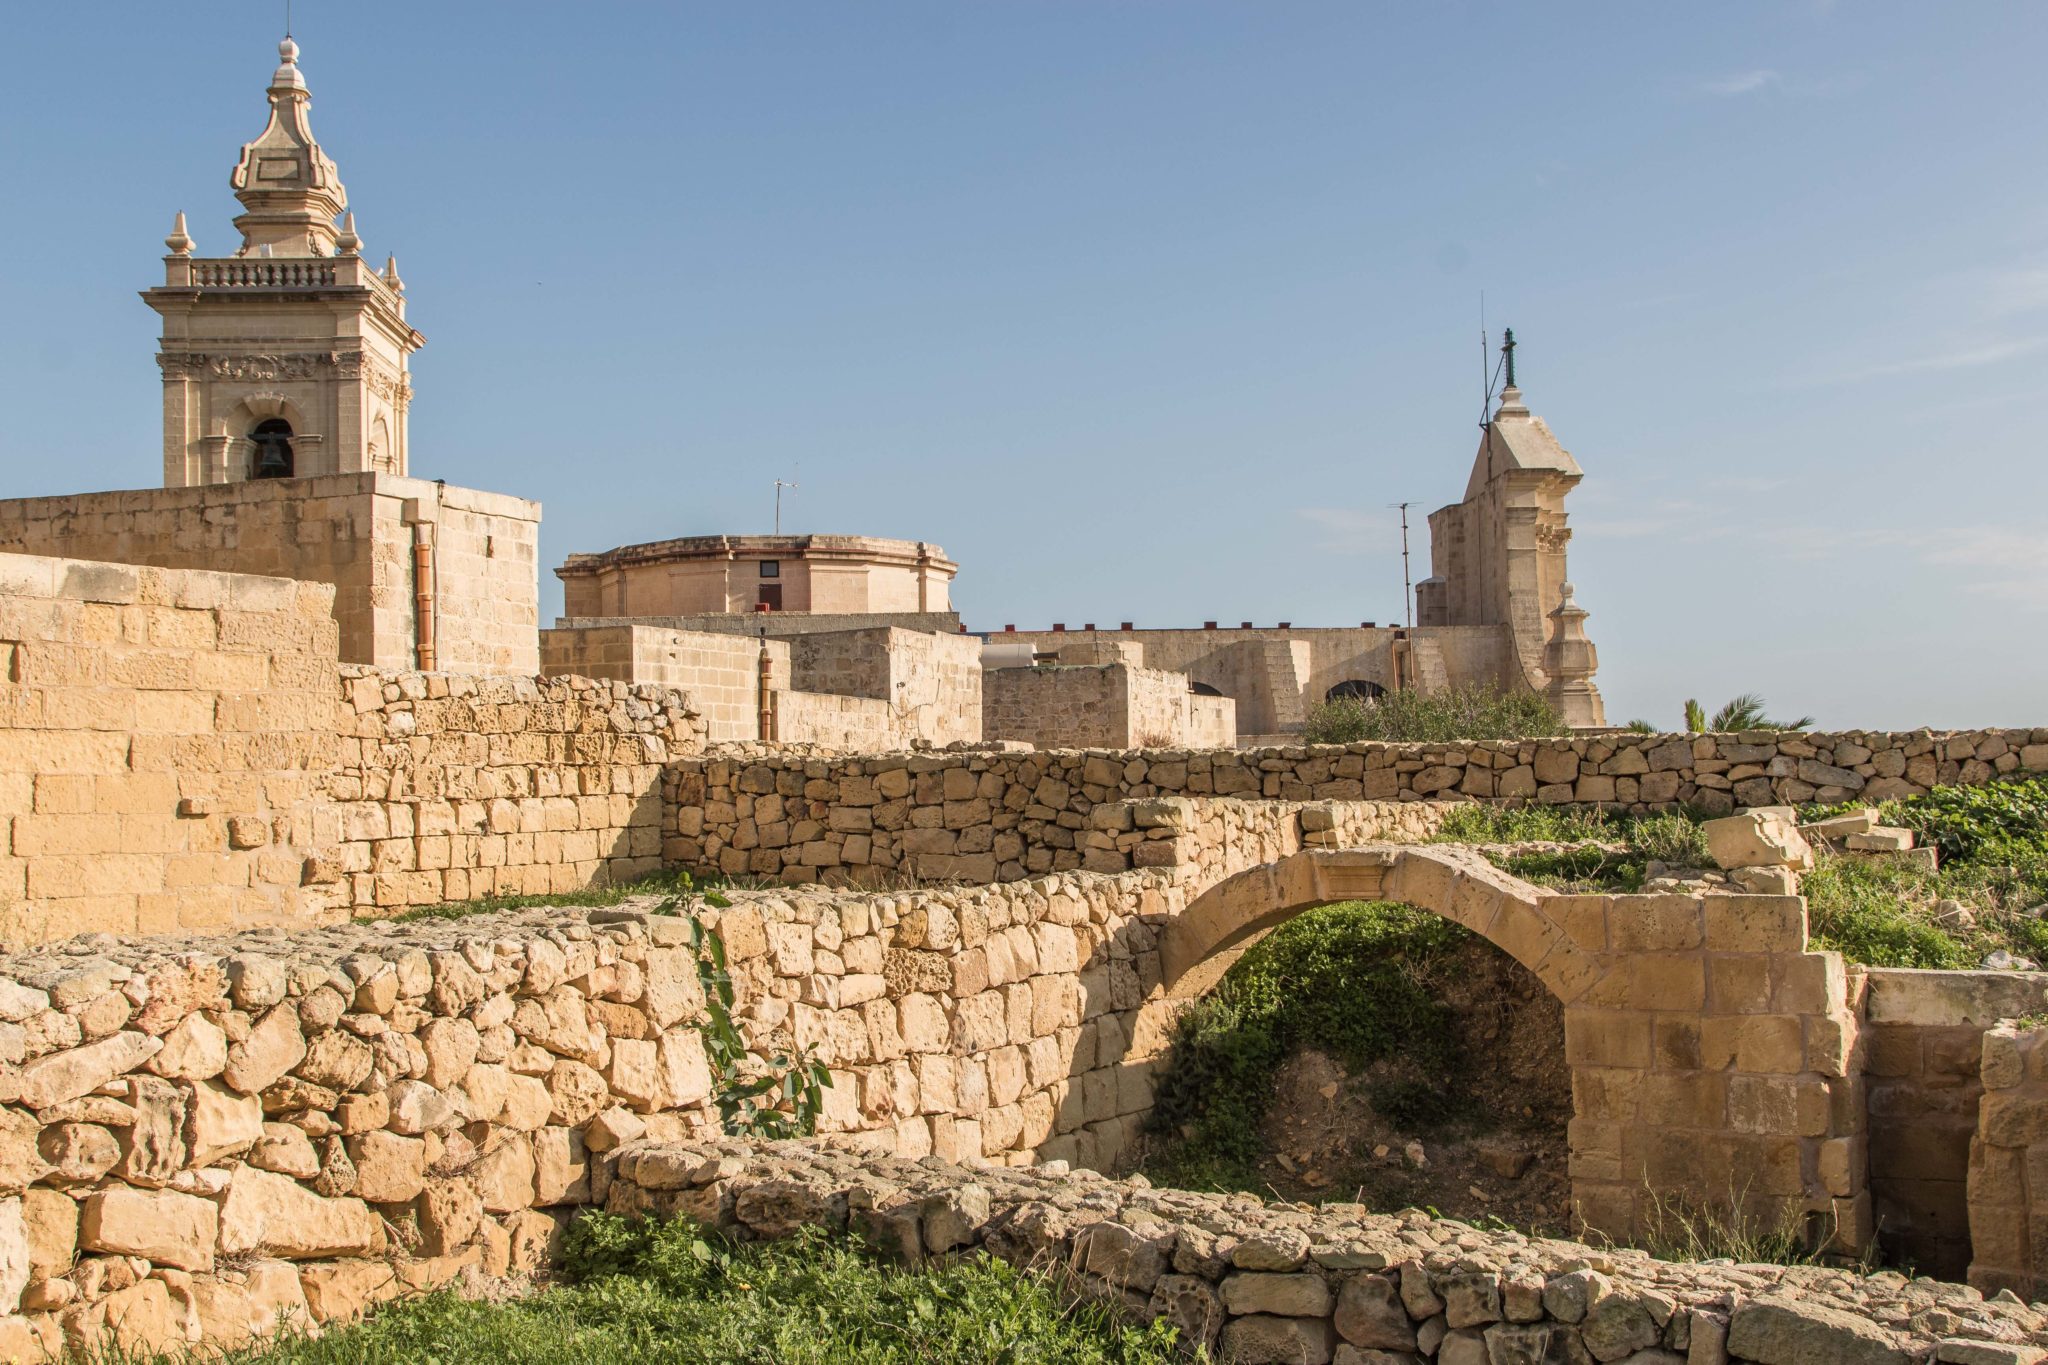 Go for Gozo – Victoria i Cittadella